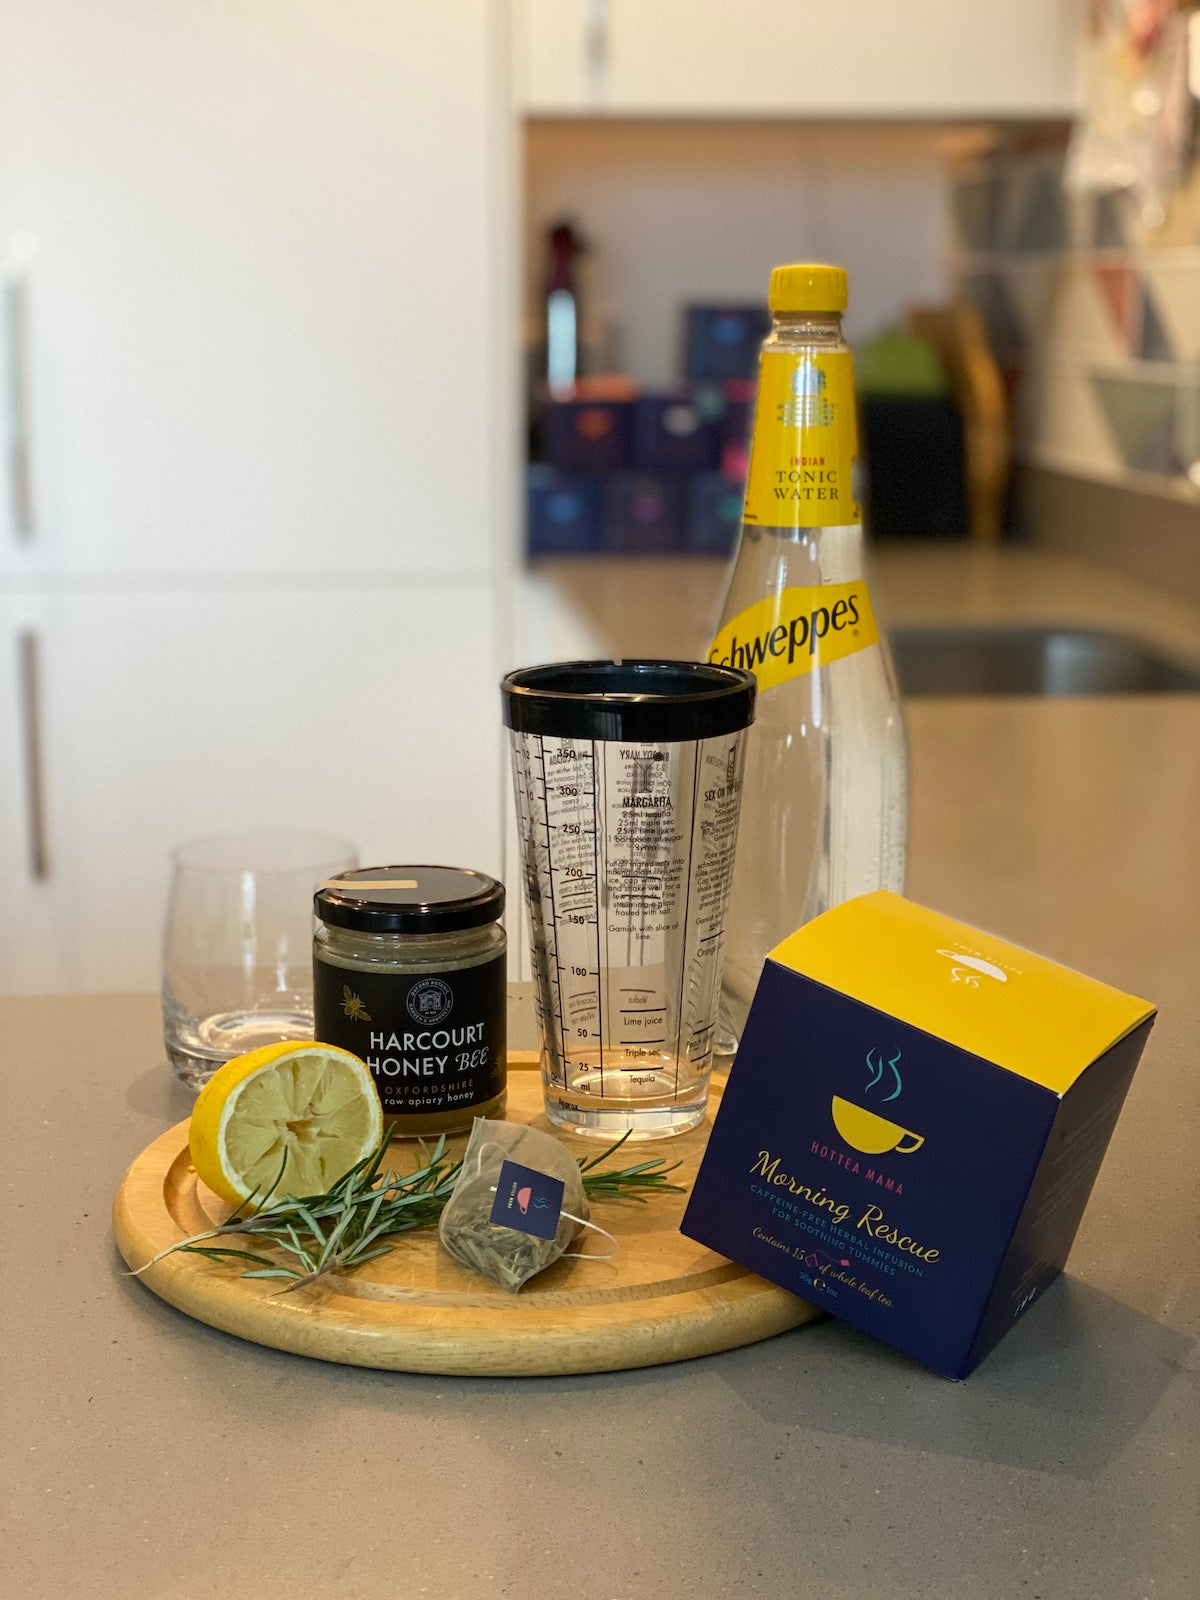 Ingredients for mocktail on kitchen side - tonic water, cocktail mixer, honey, lemon, Morning Rescue Tea